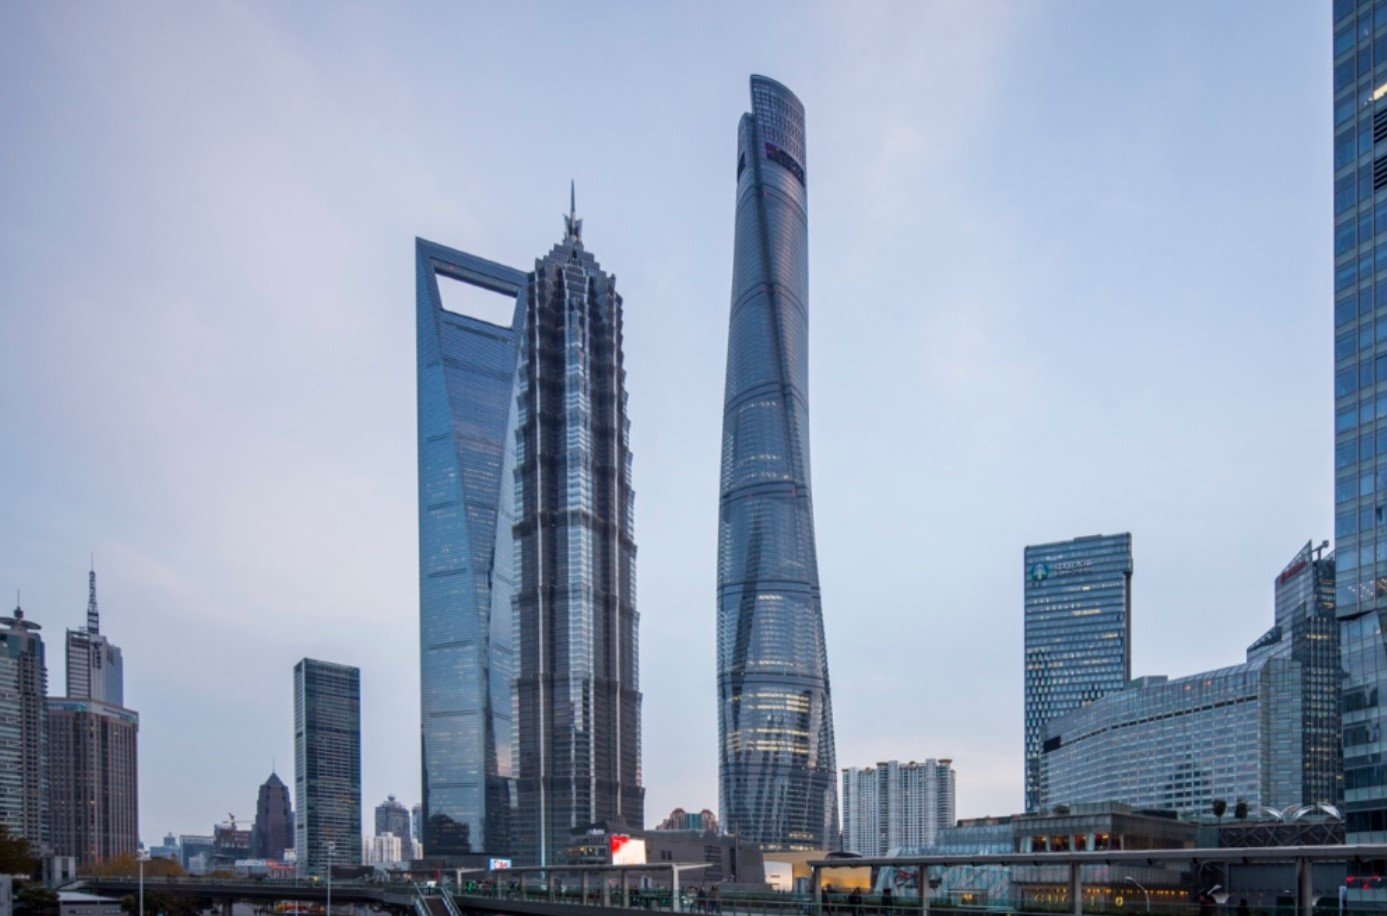 Shanghai Tower Shanghai China tallest building travelhyme